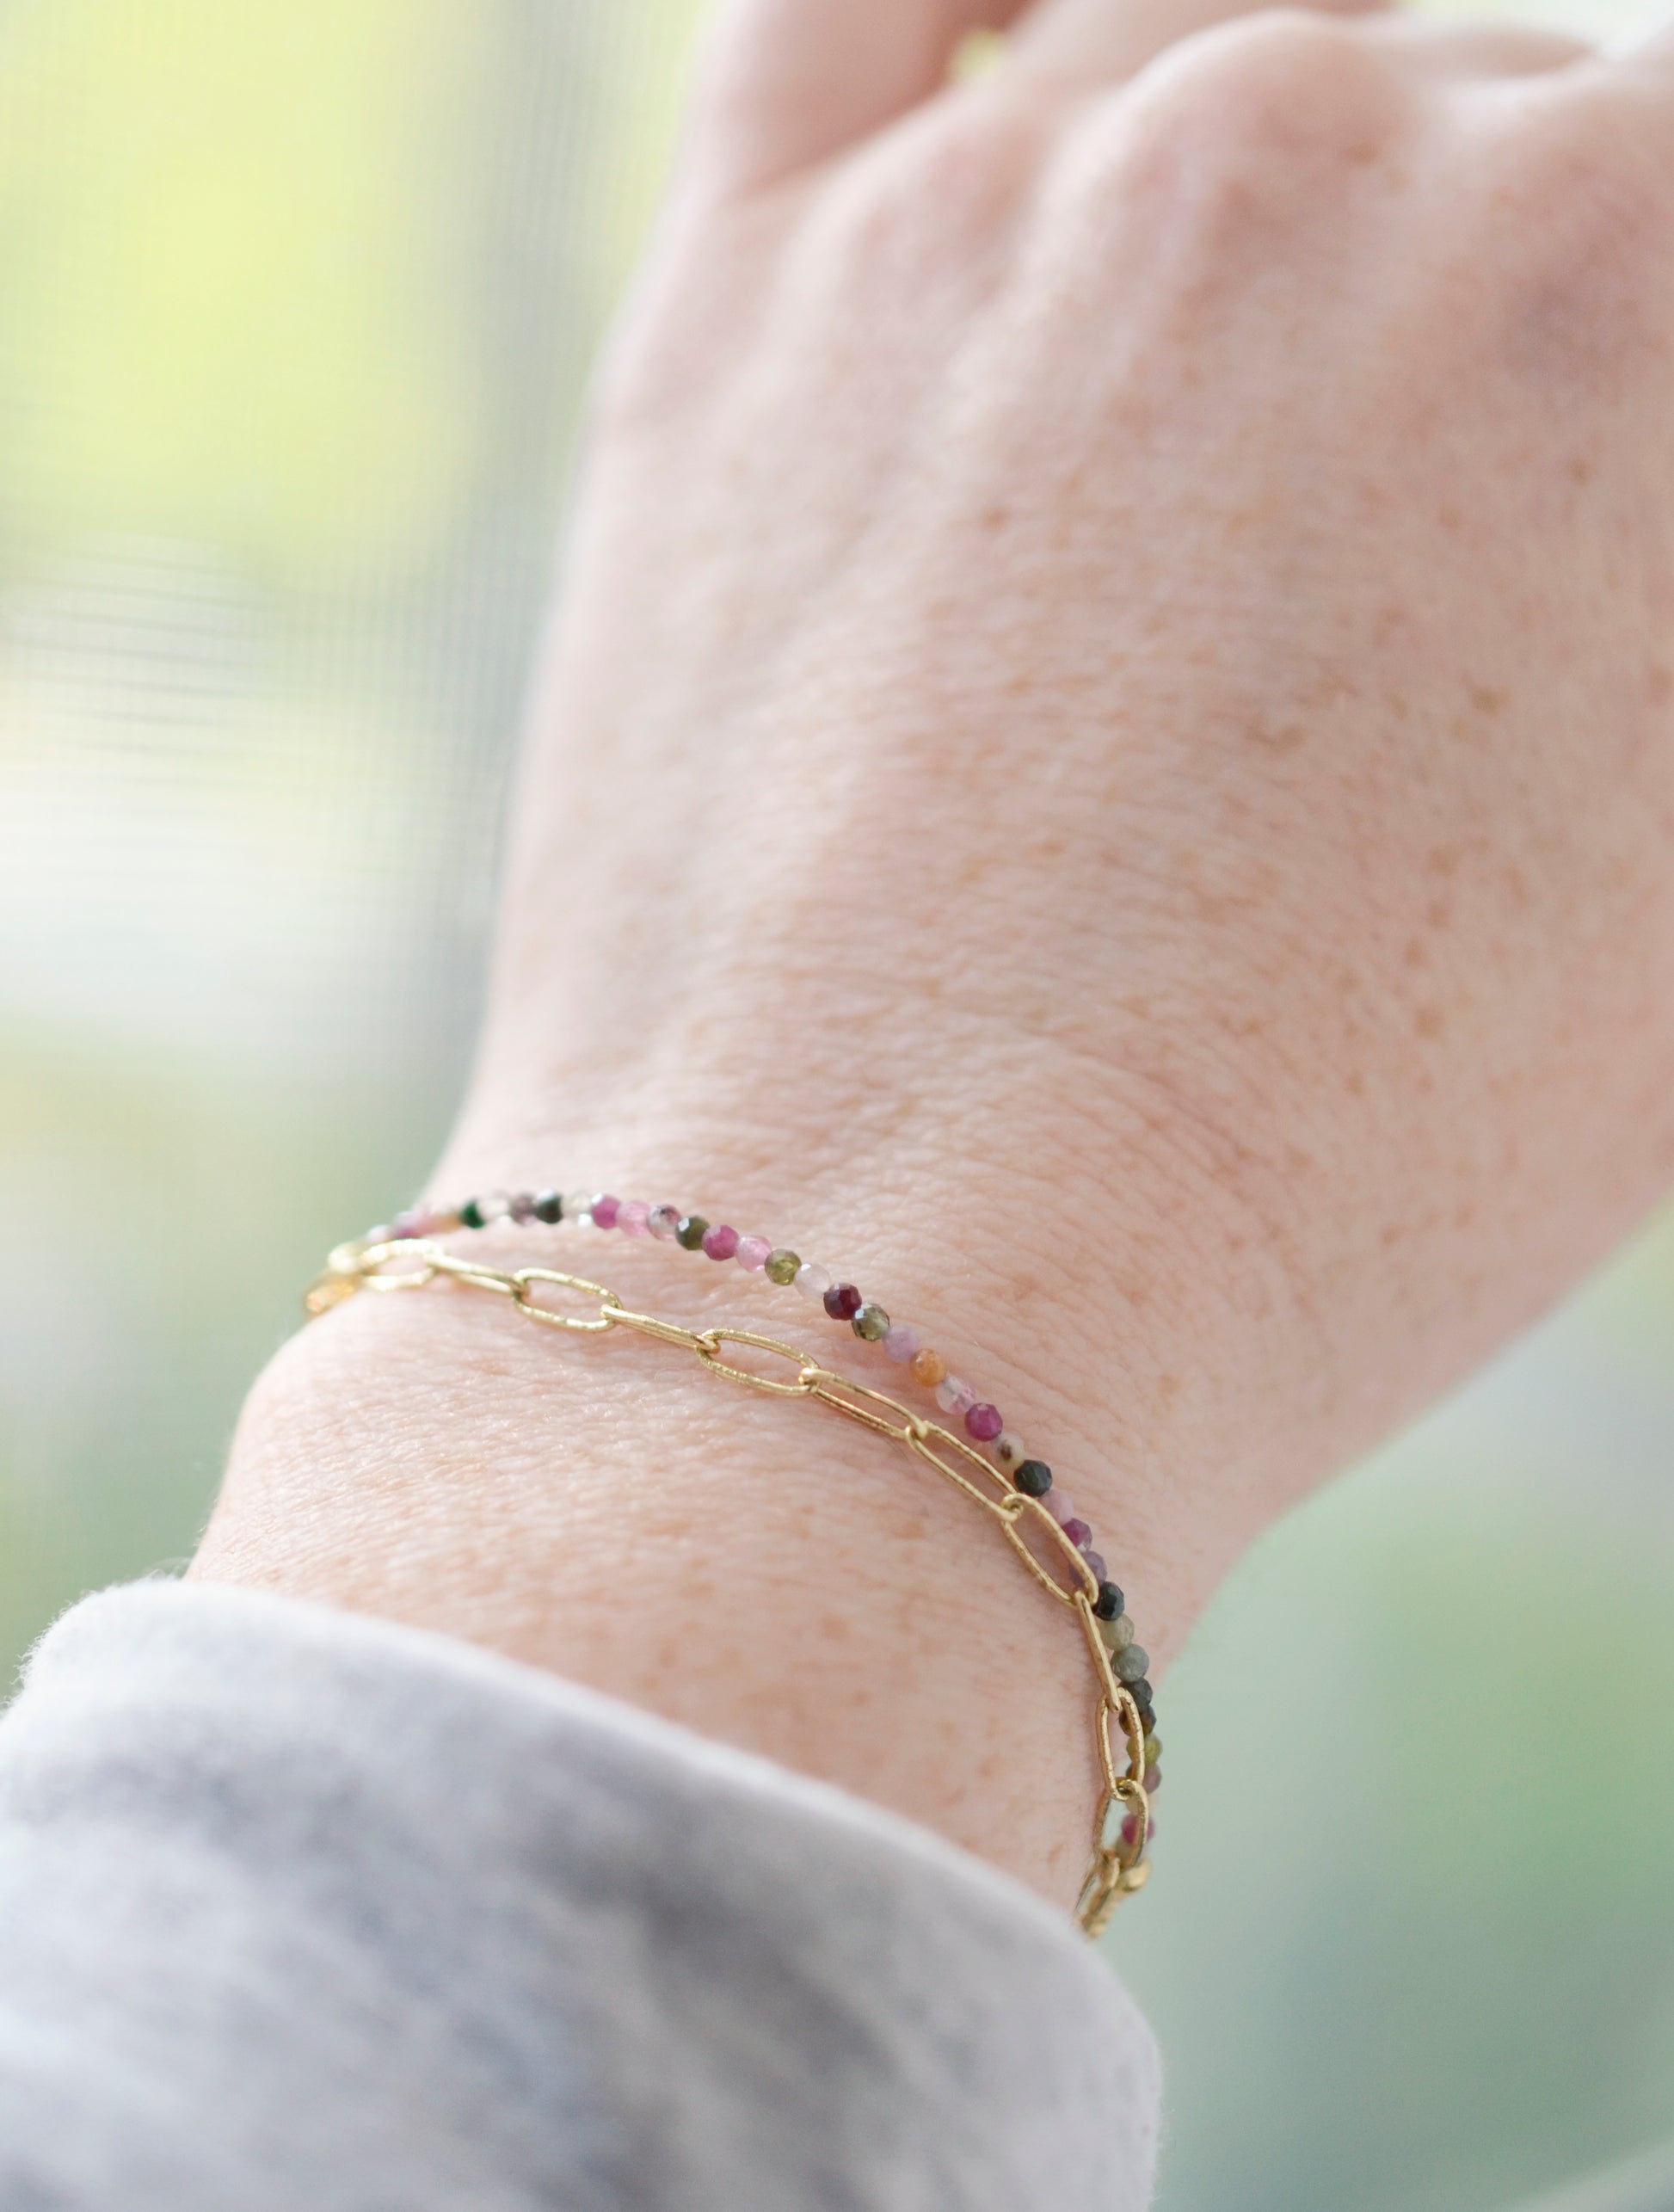 Tiny mulit-color Tourmaline faceted round gemstones on a gold beaded bracelet. Modeled image.